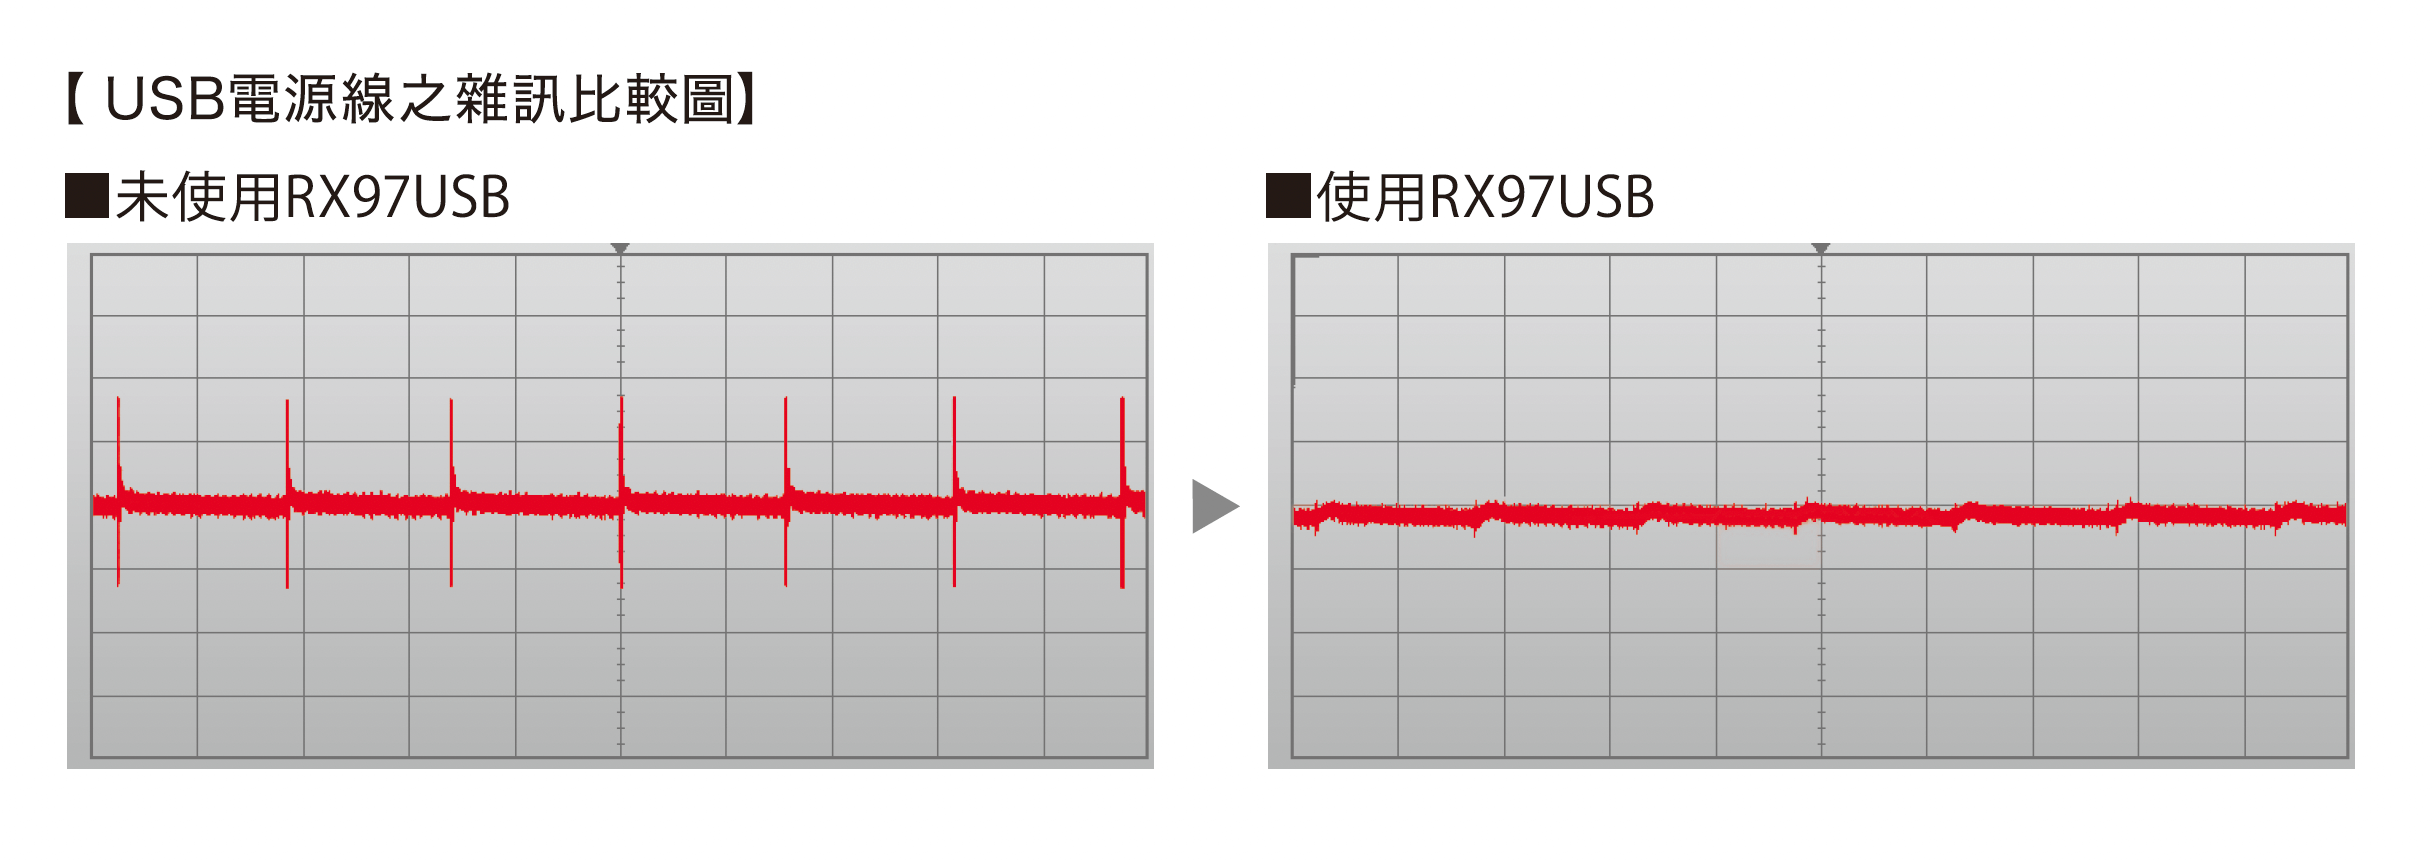 AT-RX97USB 音訊優化轉接器- 台灣鐵三角股份有限公司| Audio-Technica